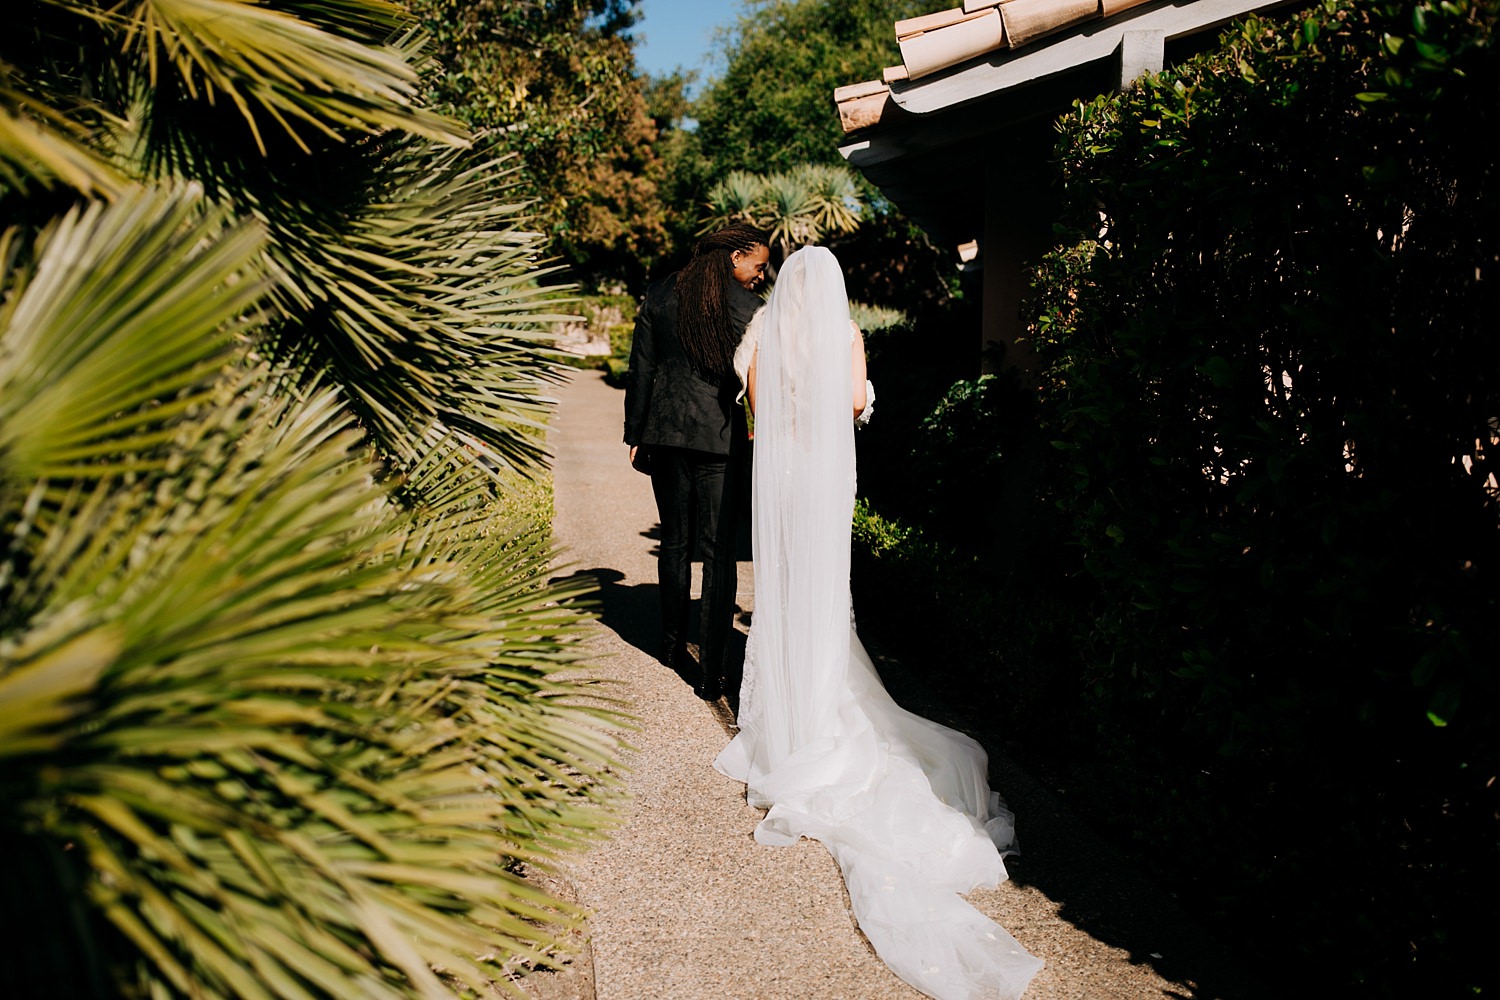 Rancho Valencia Wedding | https://alexandriamonette.com